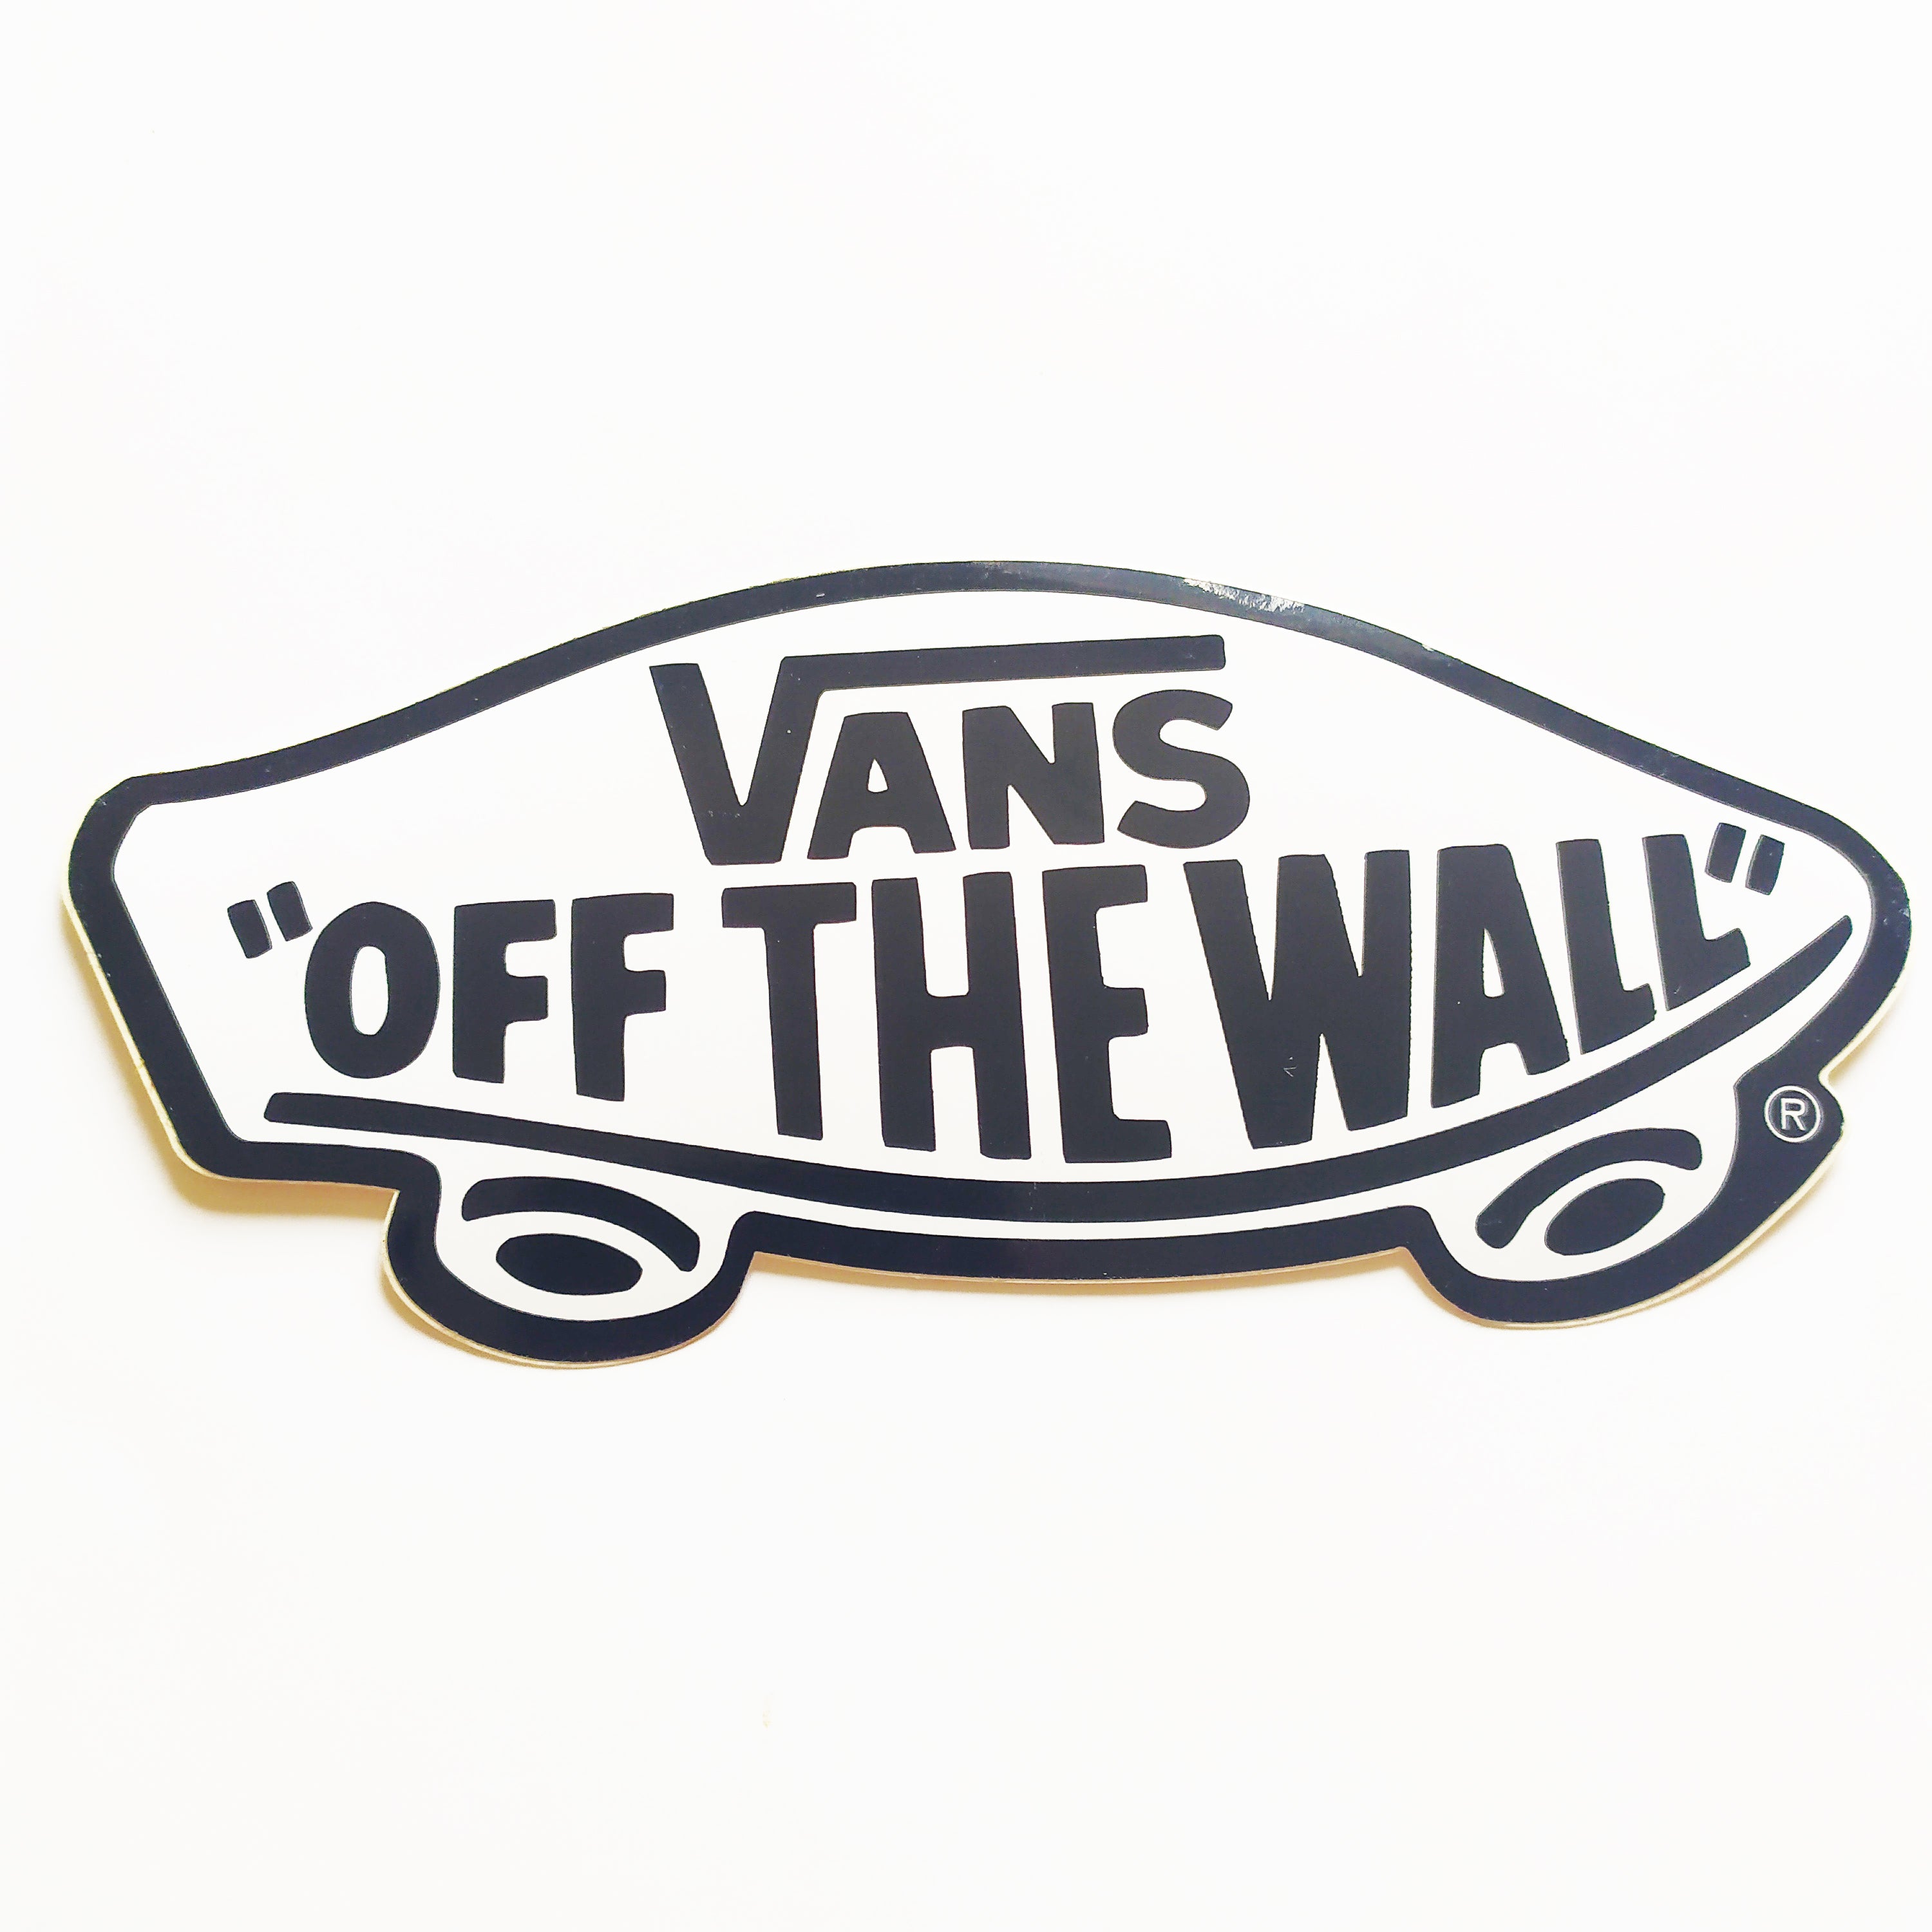 Vans Shoes Skateboard Sticker - Off The Wall - 15cm across approx - White - SkateboardStickers.com